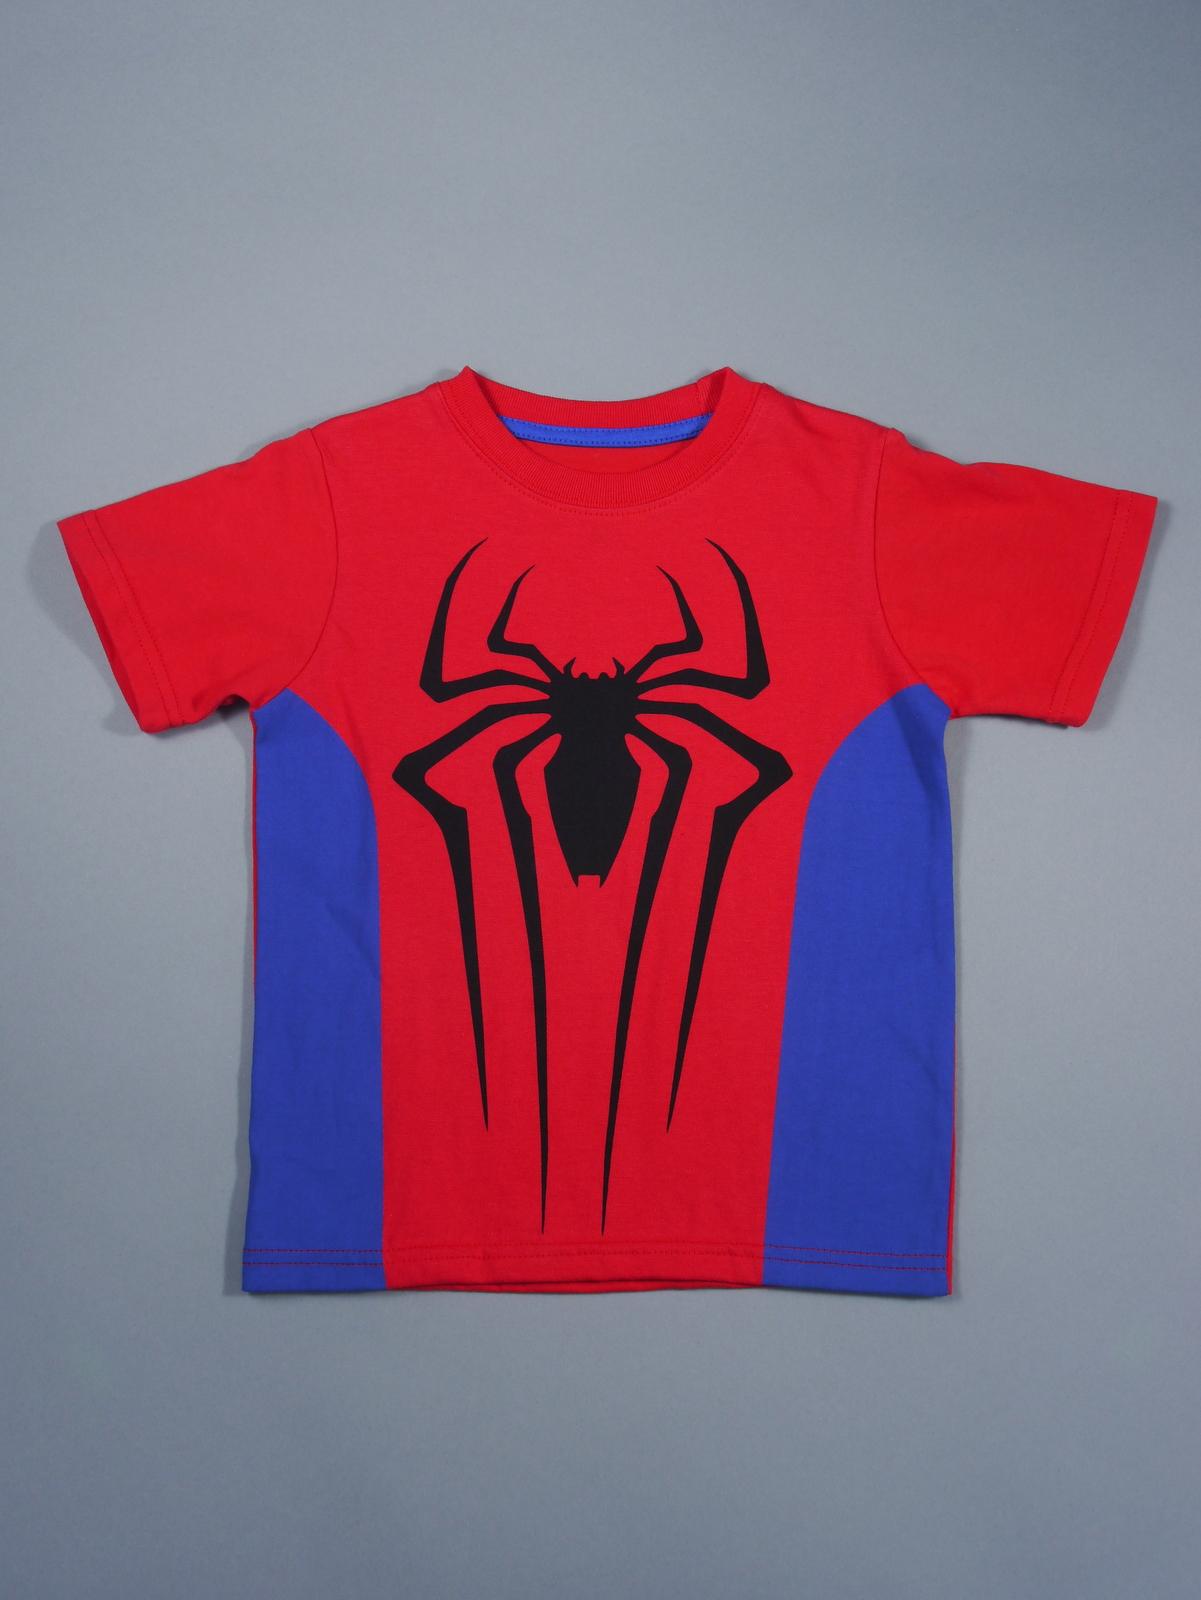 Marvel Spider-Man Toddler Boy's T-Shirt